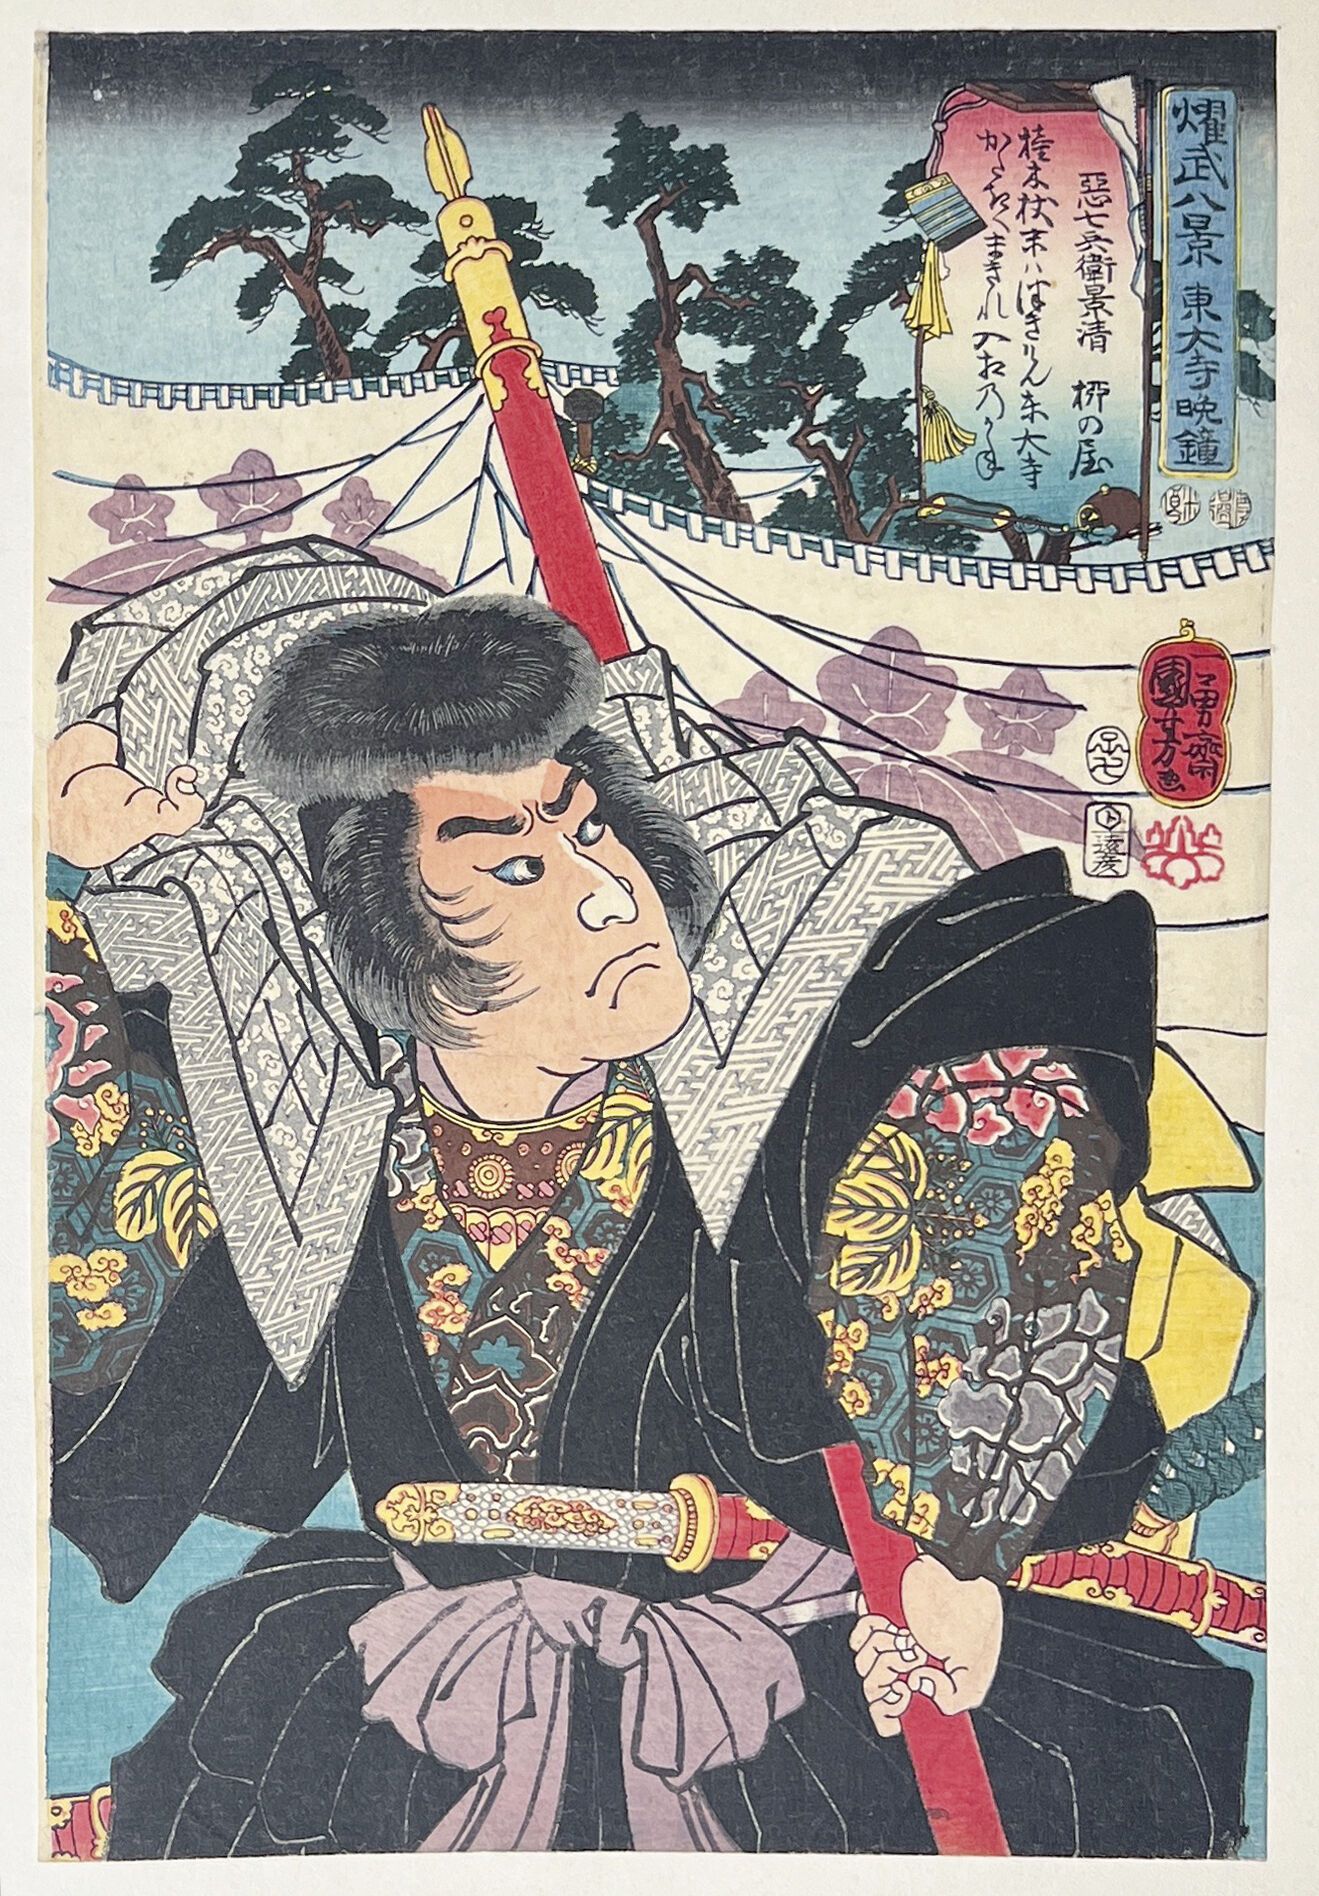 Null 宇都宫邦彦 (1797-1861)
御笔八景 "系列中的 "御笔八景"，版画 "东大寺的晚钟"。
署名Ichiyusai Kuniyoshi，出版商E&hellip;